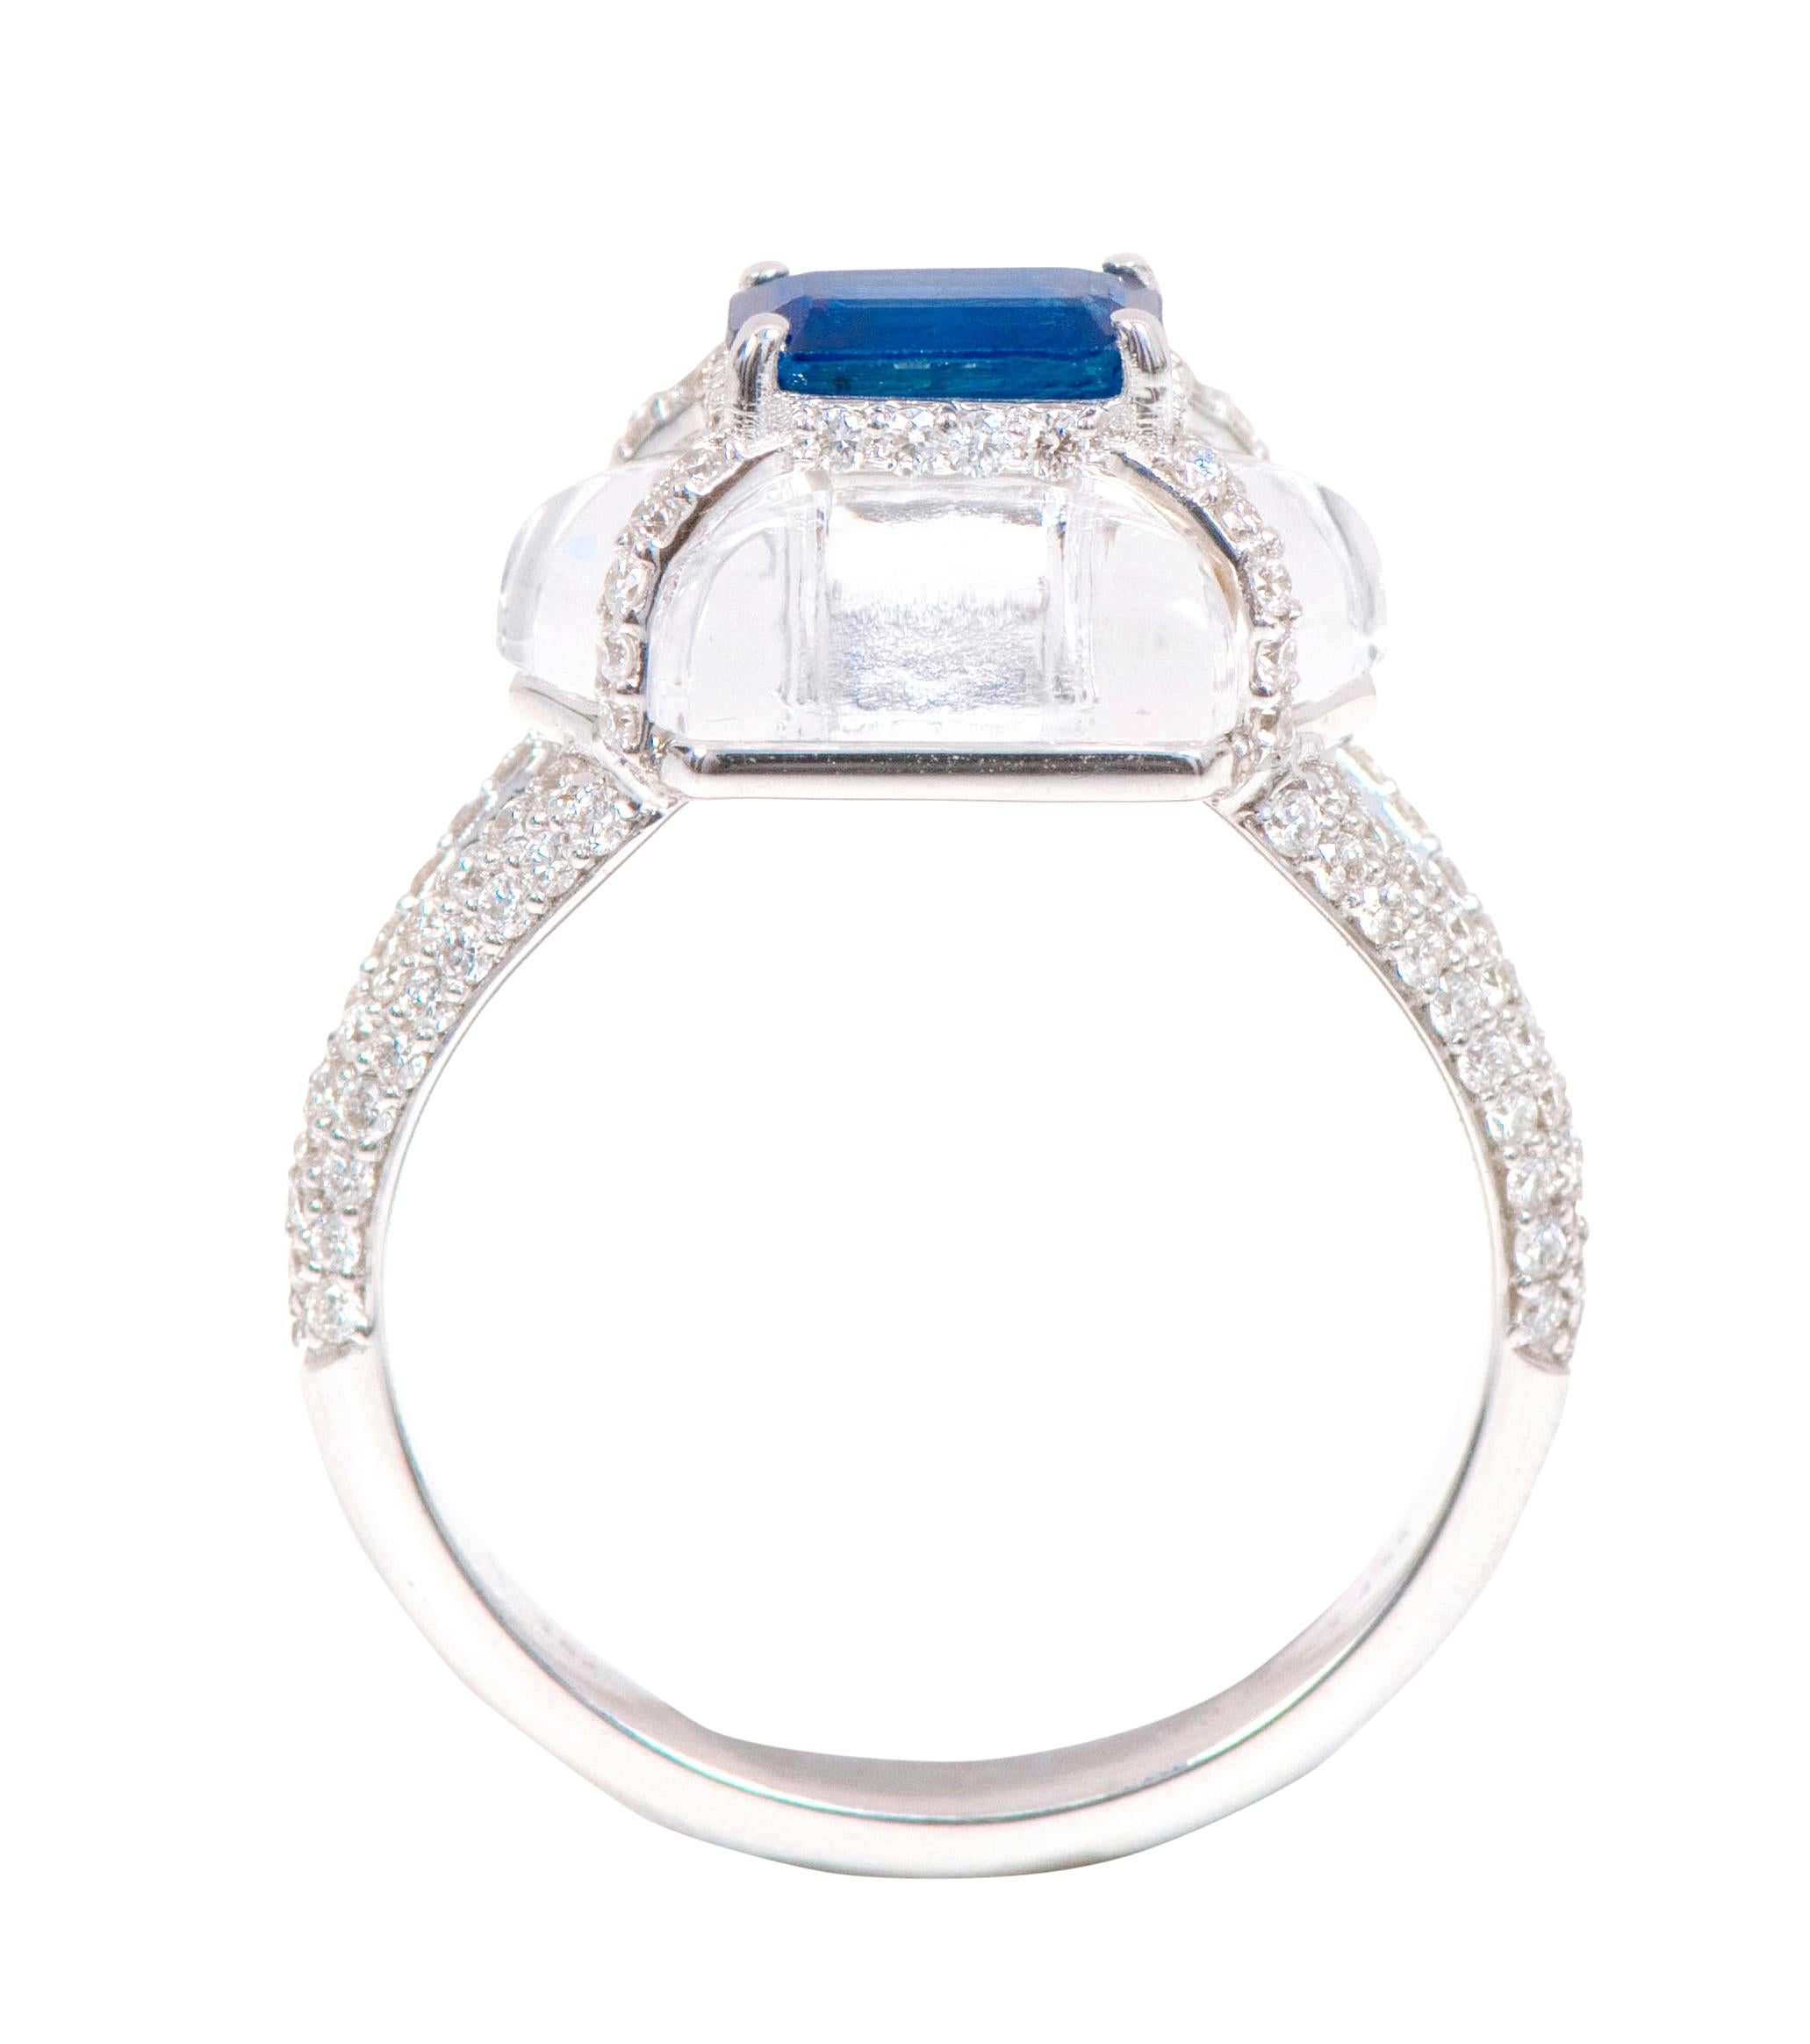 Women's 18 Karat White Gold 5.13 Carat Diamond, Sapphire, and Crystal Fashion Ring For Sale